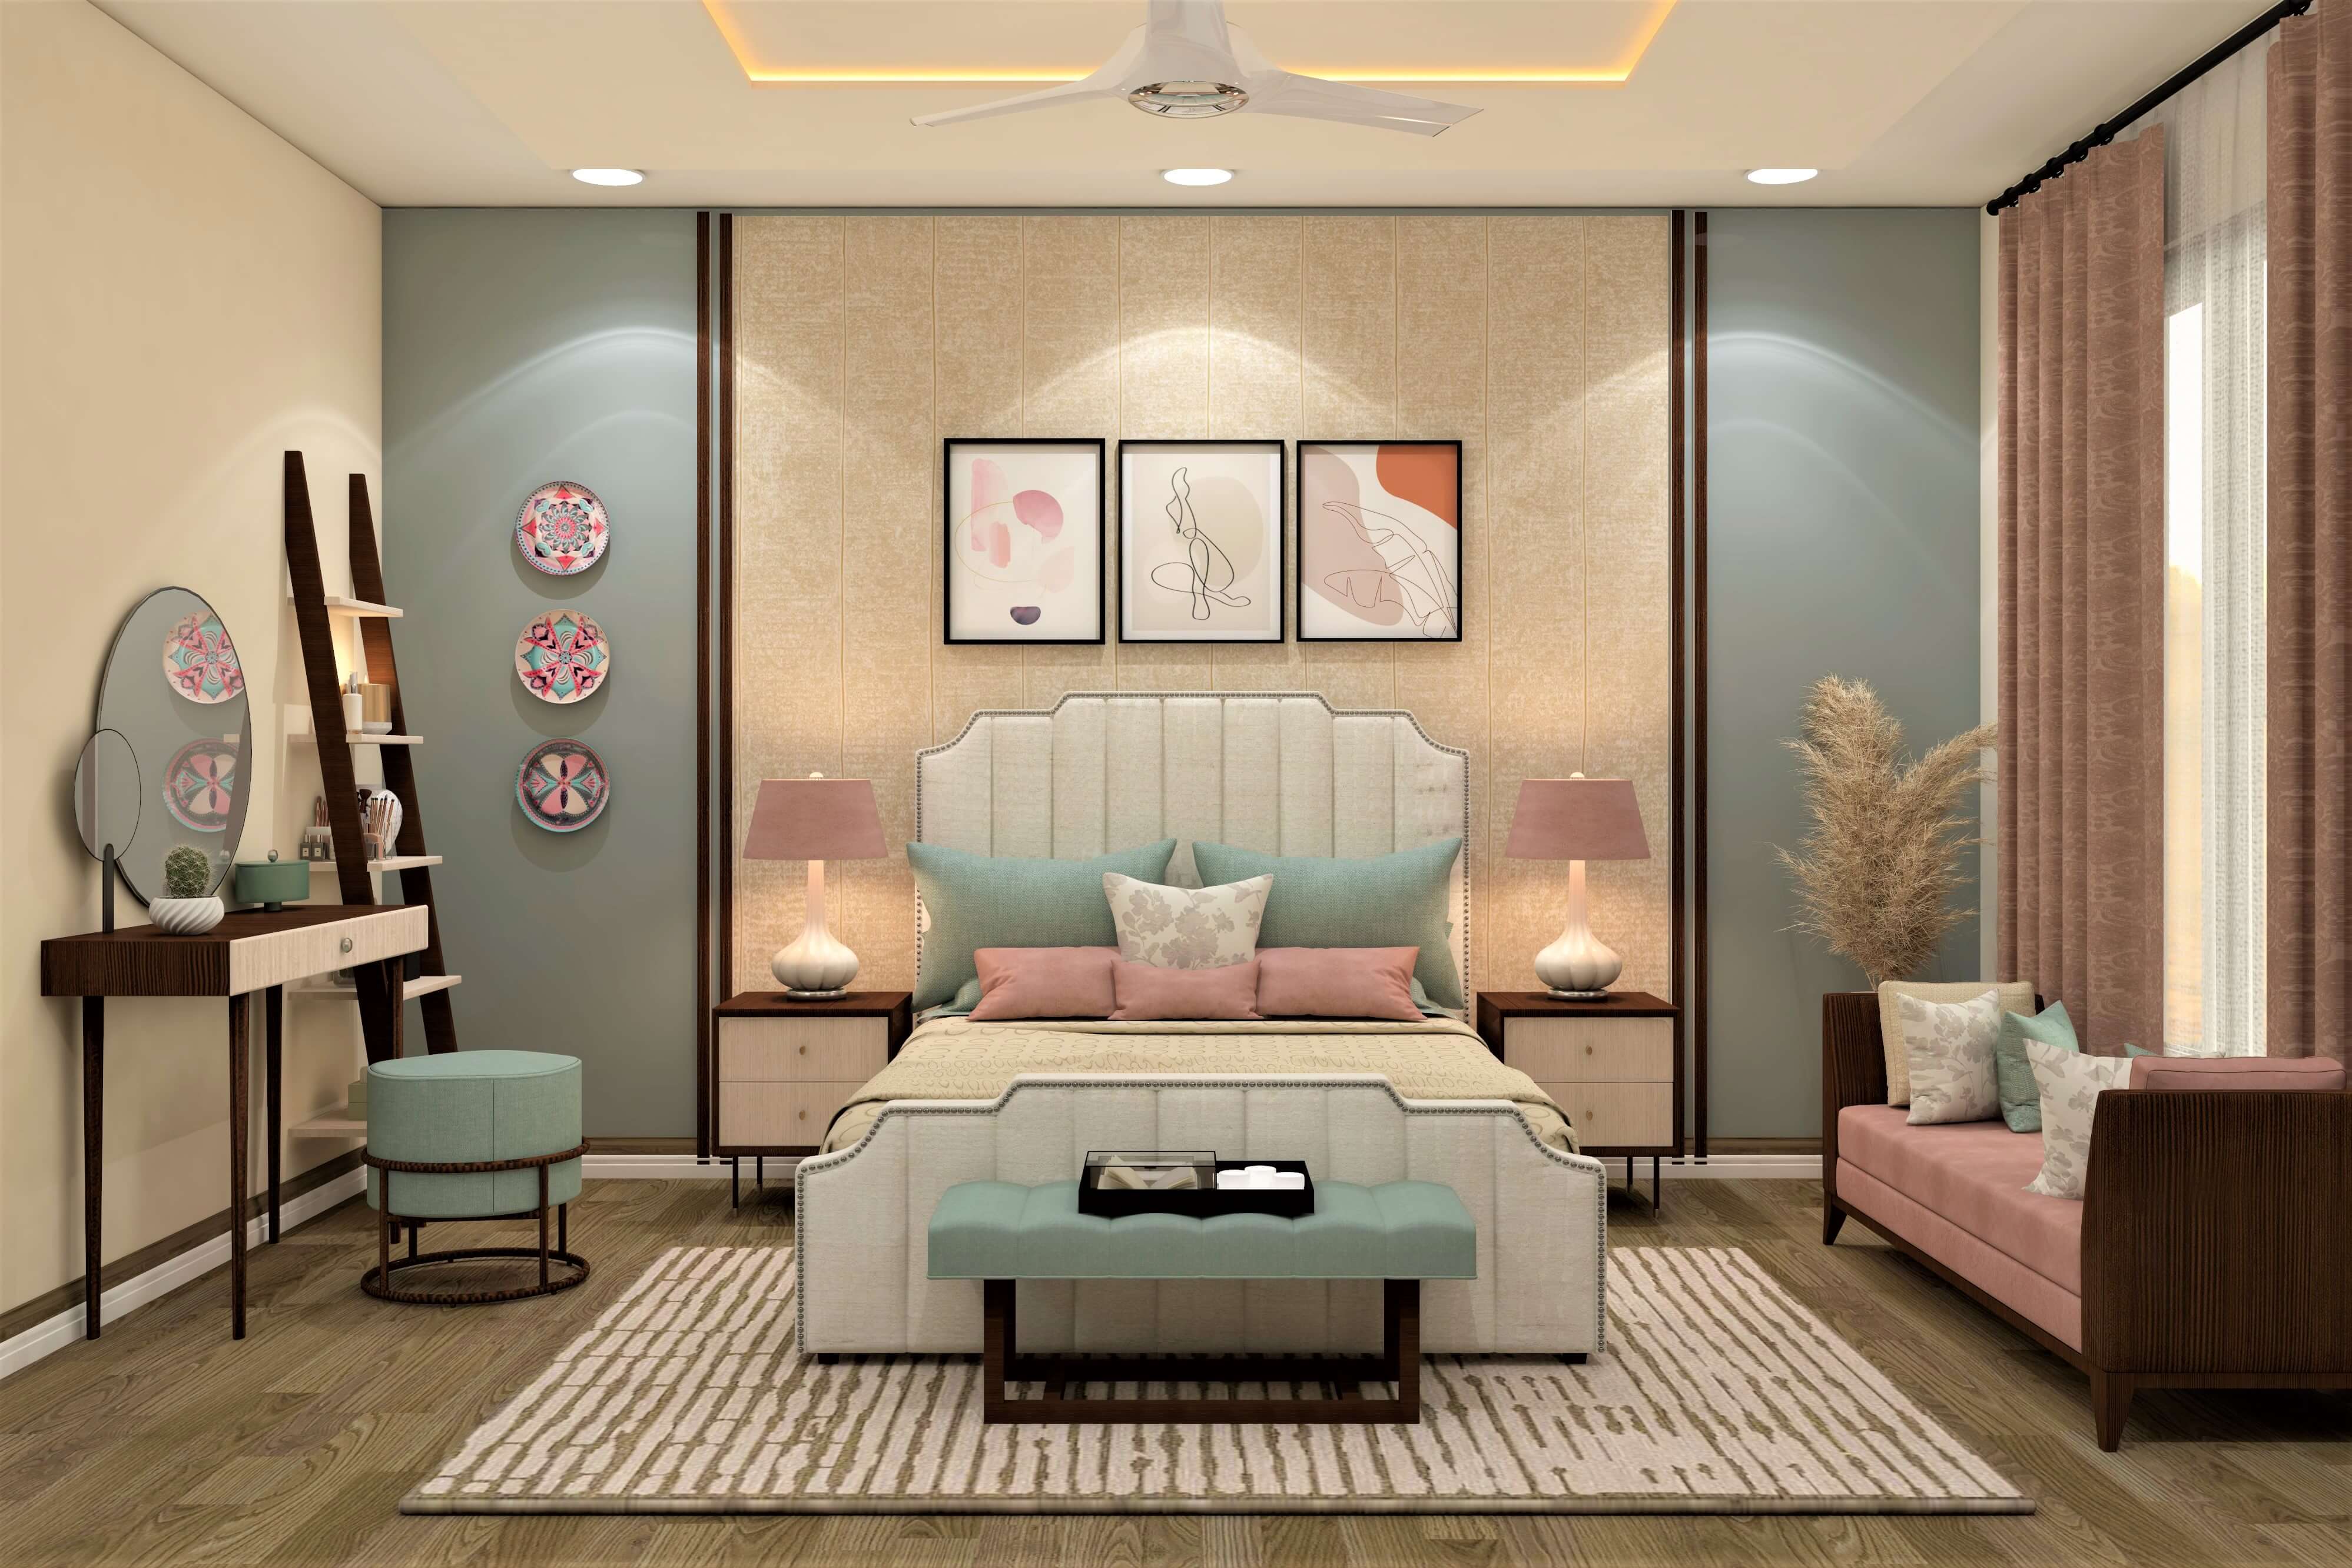 Cozy kid's bedroom with pastel undertones, built-in wardrobe, bedside tables - Beautiful Homes